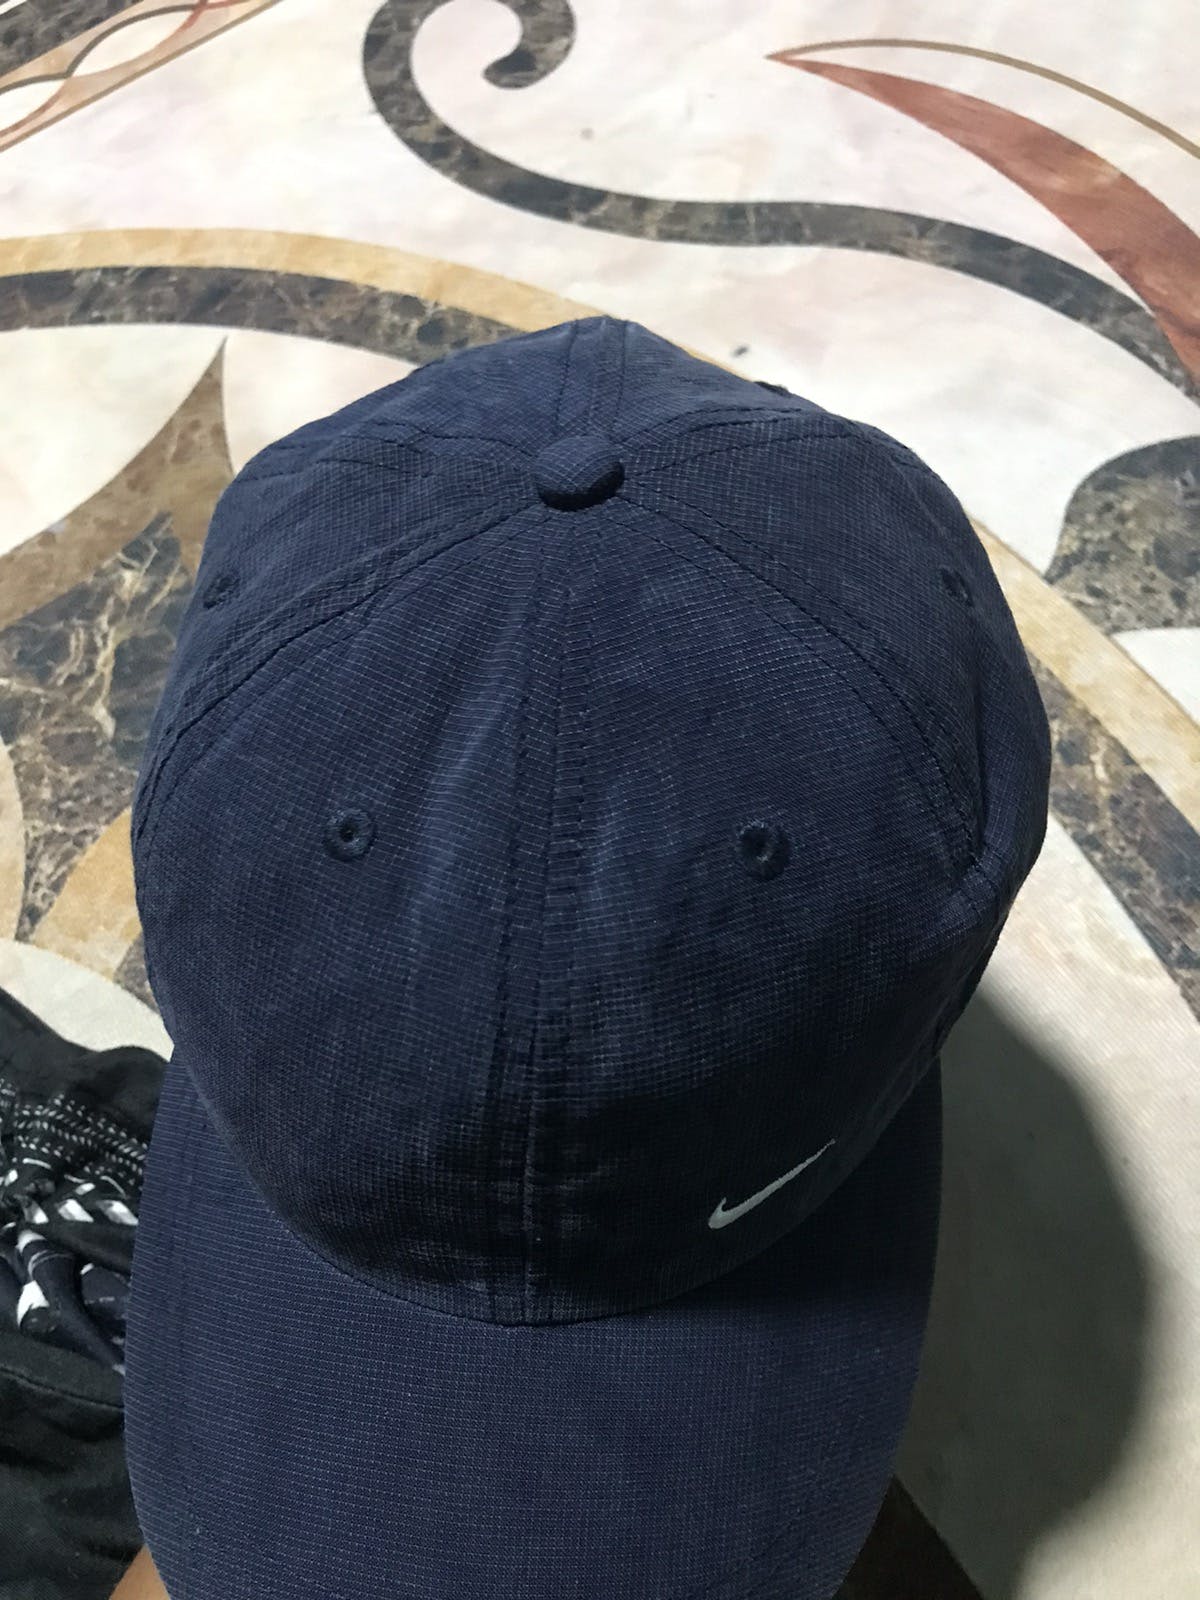 Nike cap - 2